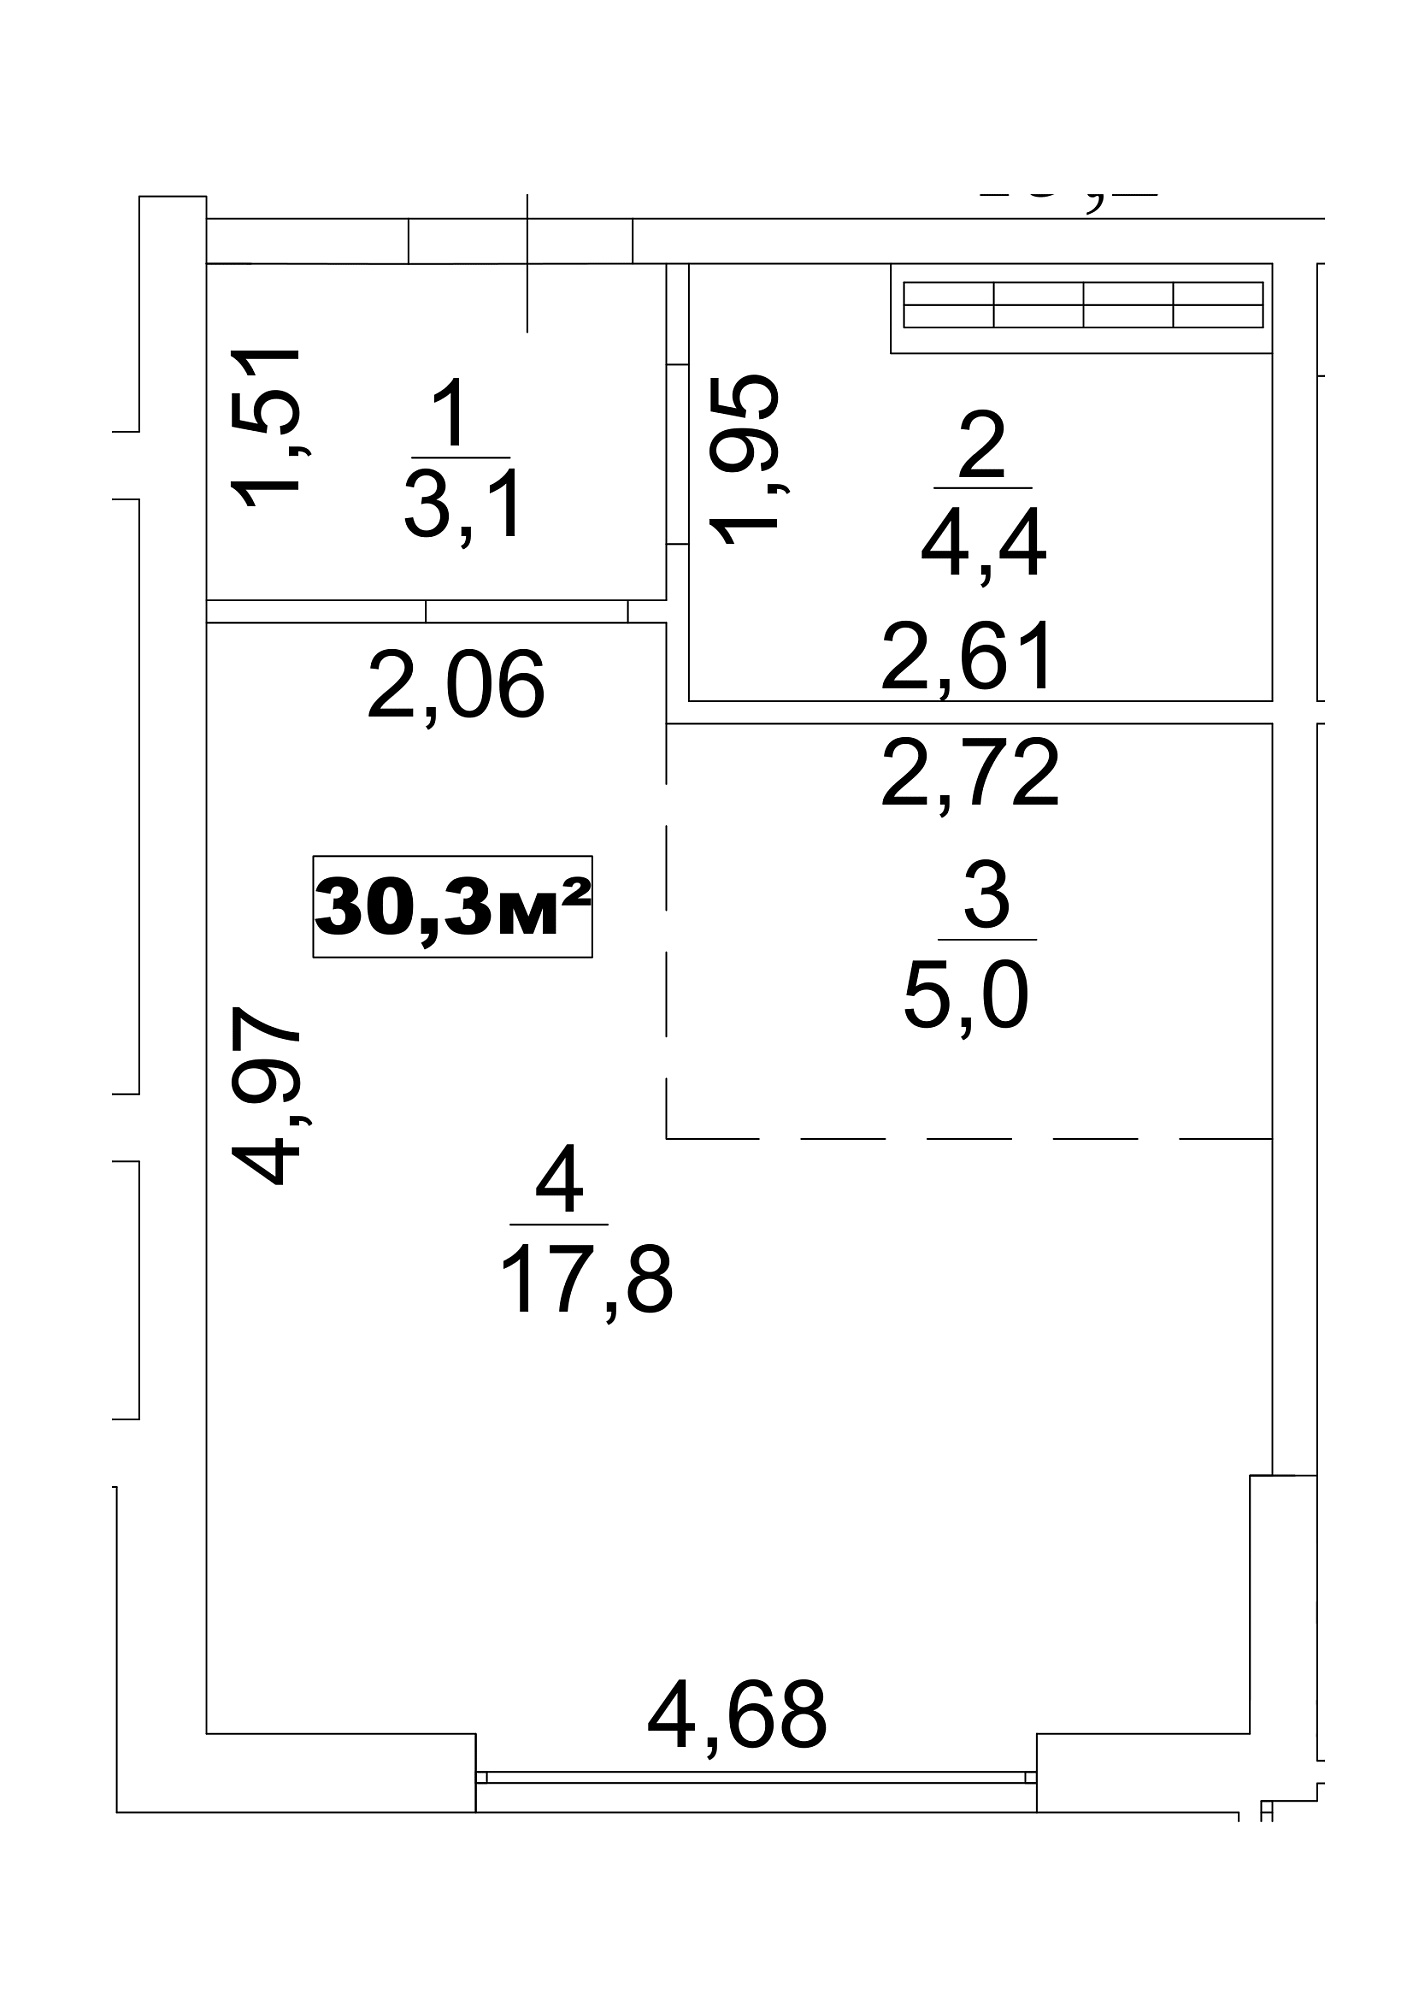 Planning Smart flats area 30.3m2, AB-13-06/00051.